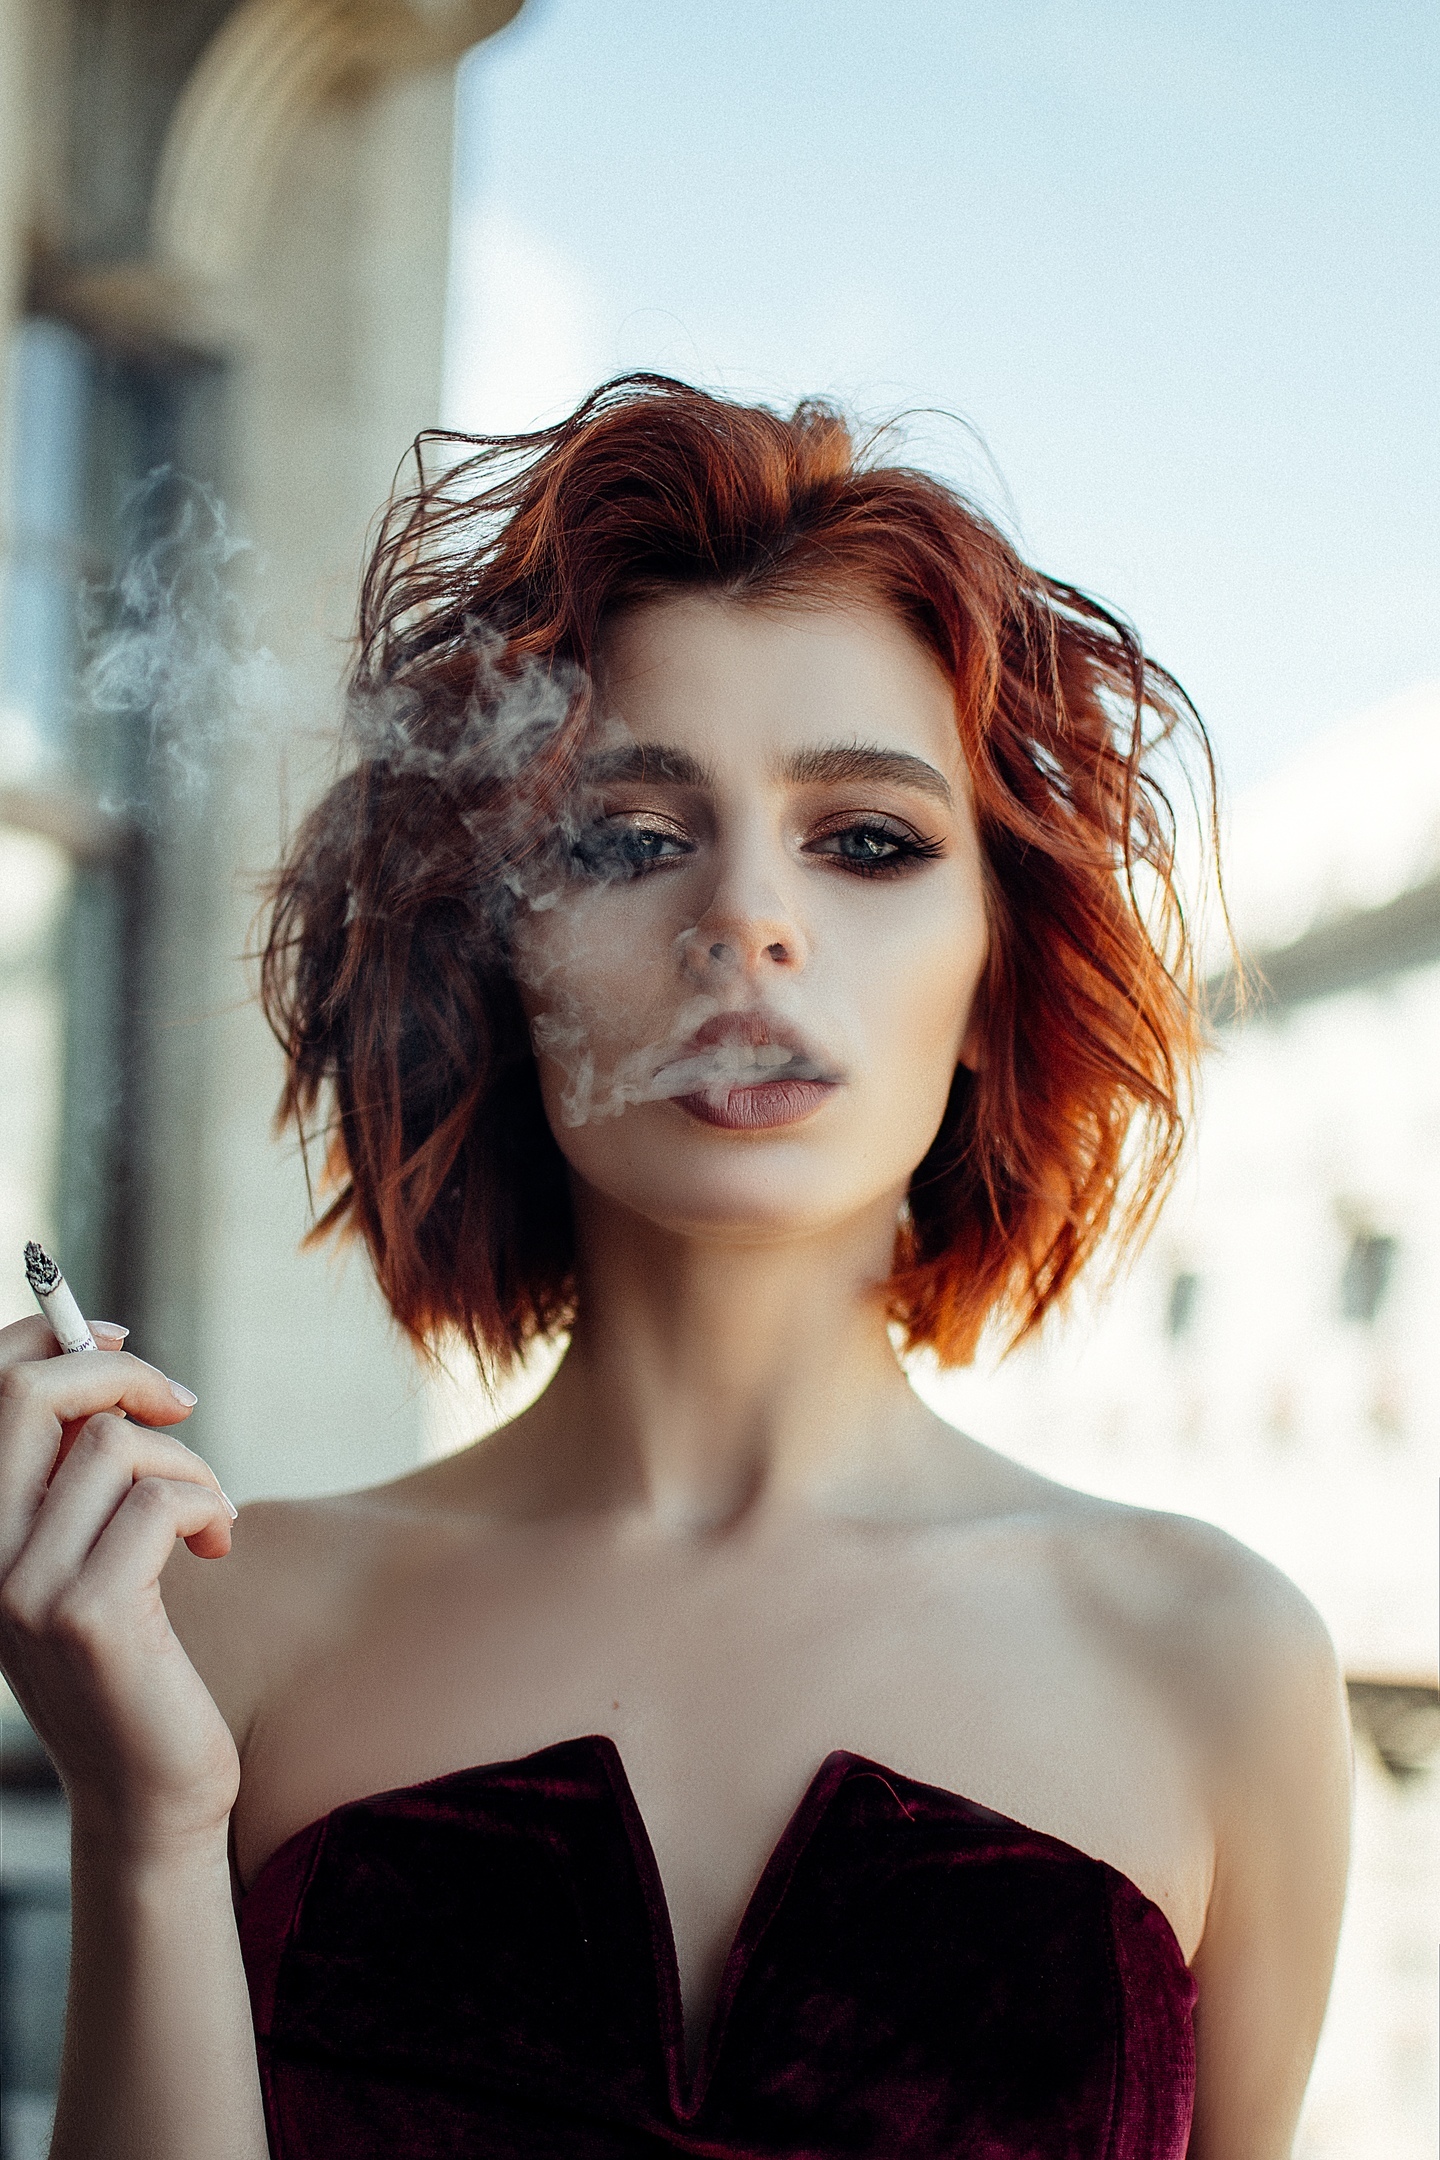 People 1440x2160 women model short hair redhead dyed hair looking at viewer portrait display natural light smoking smoke